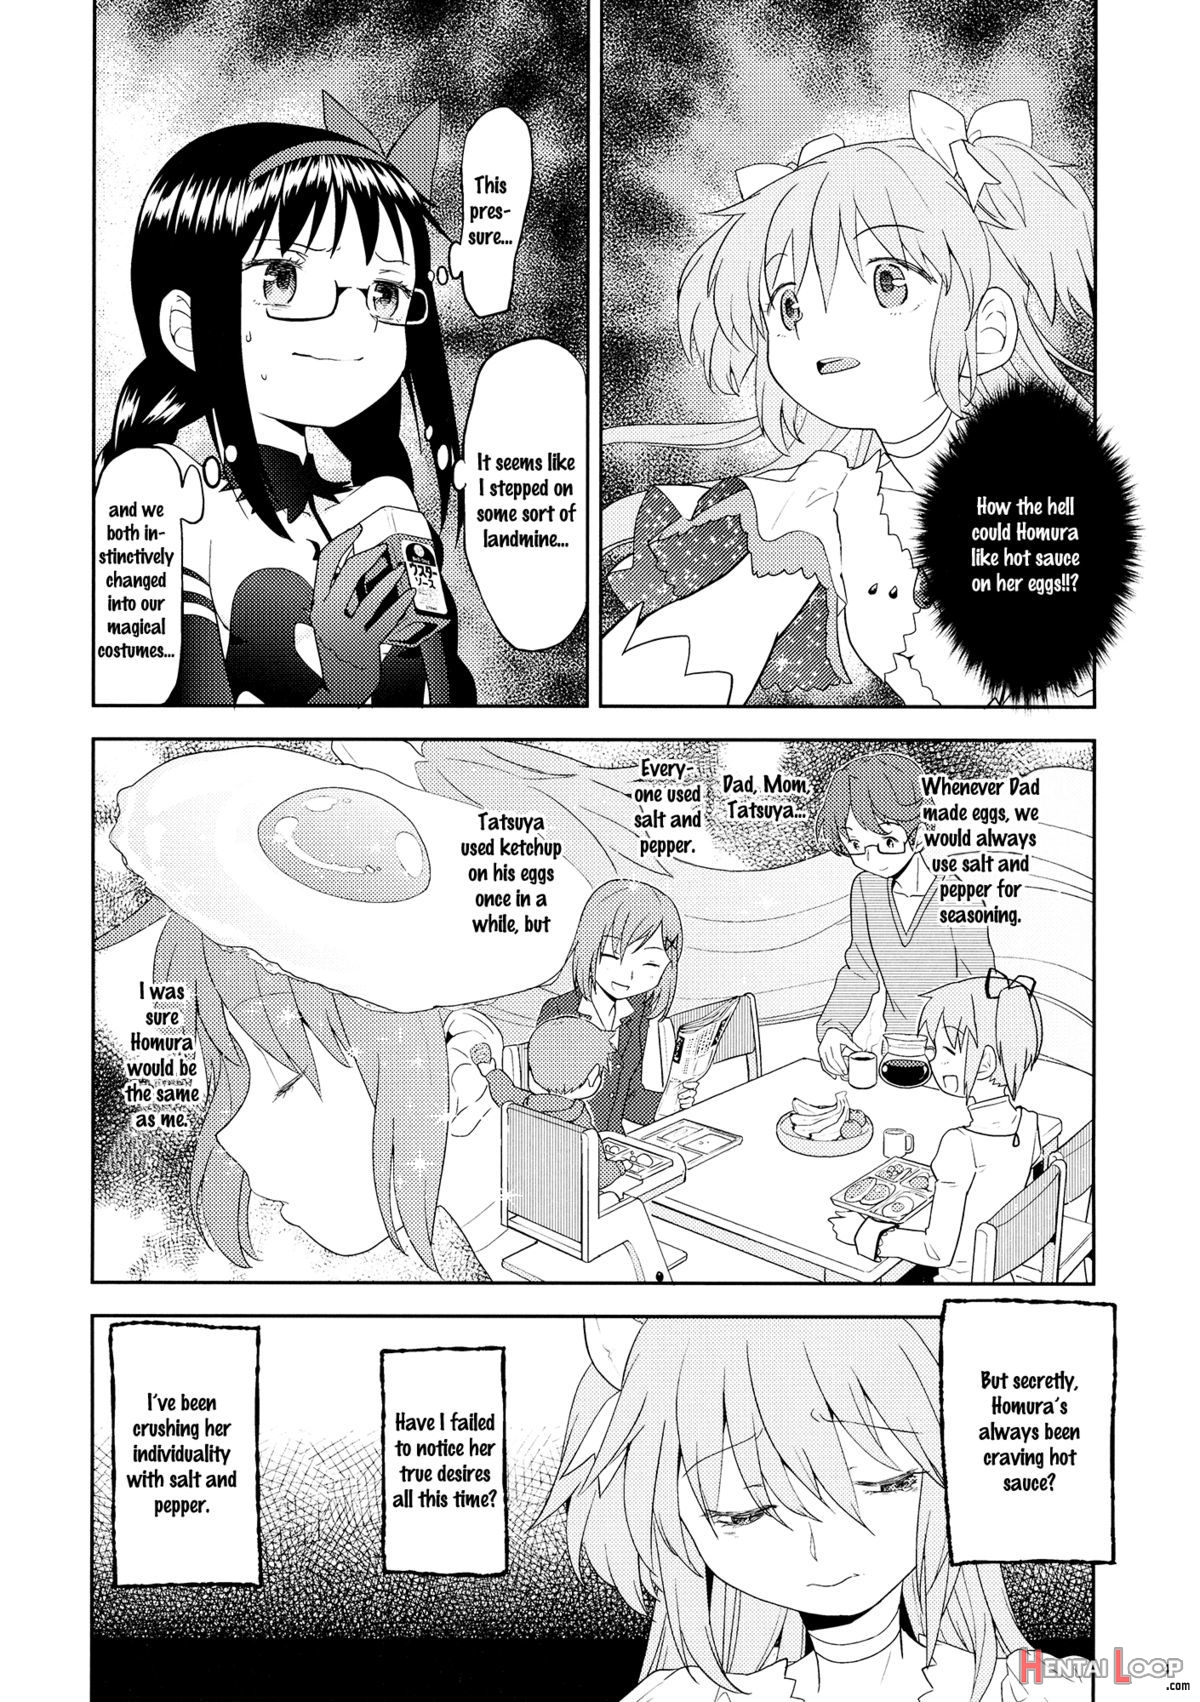 Tatami Ouroboros Duo page 5